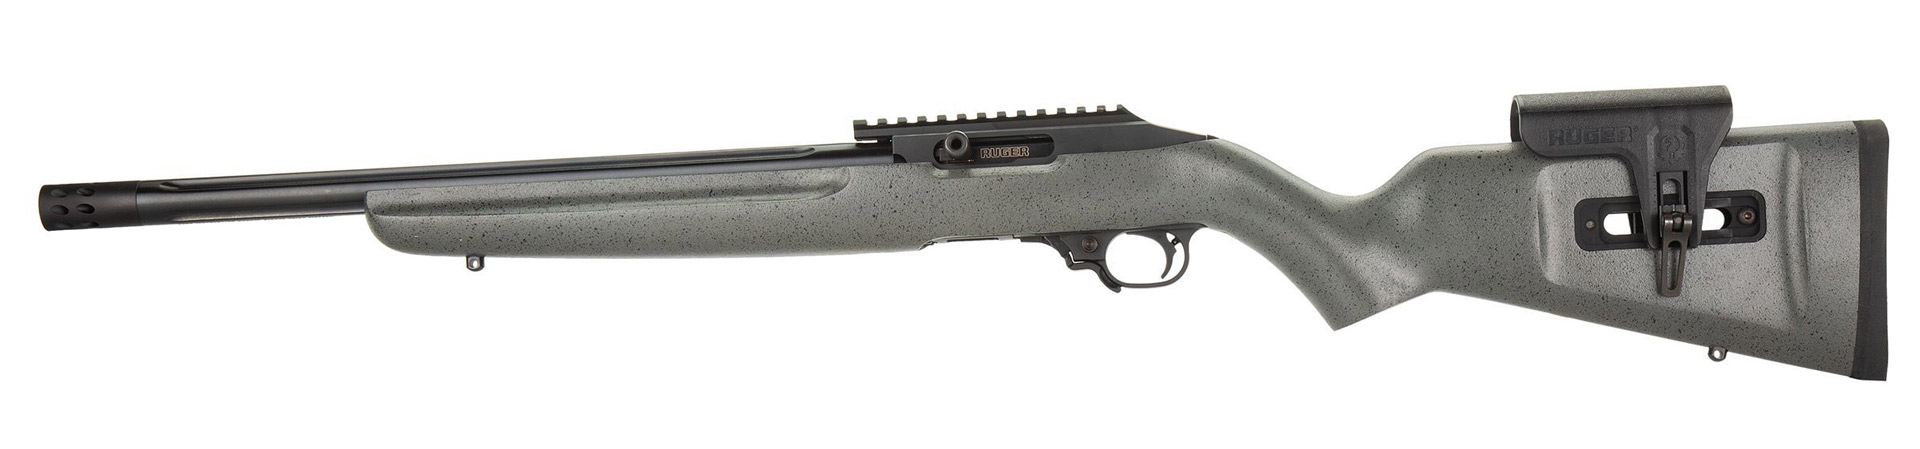 Ruger Custom Shop Left-Handed 10/22 Competition Rifle